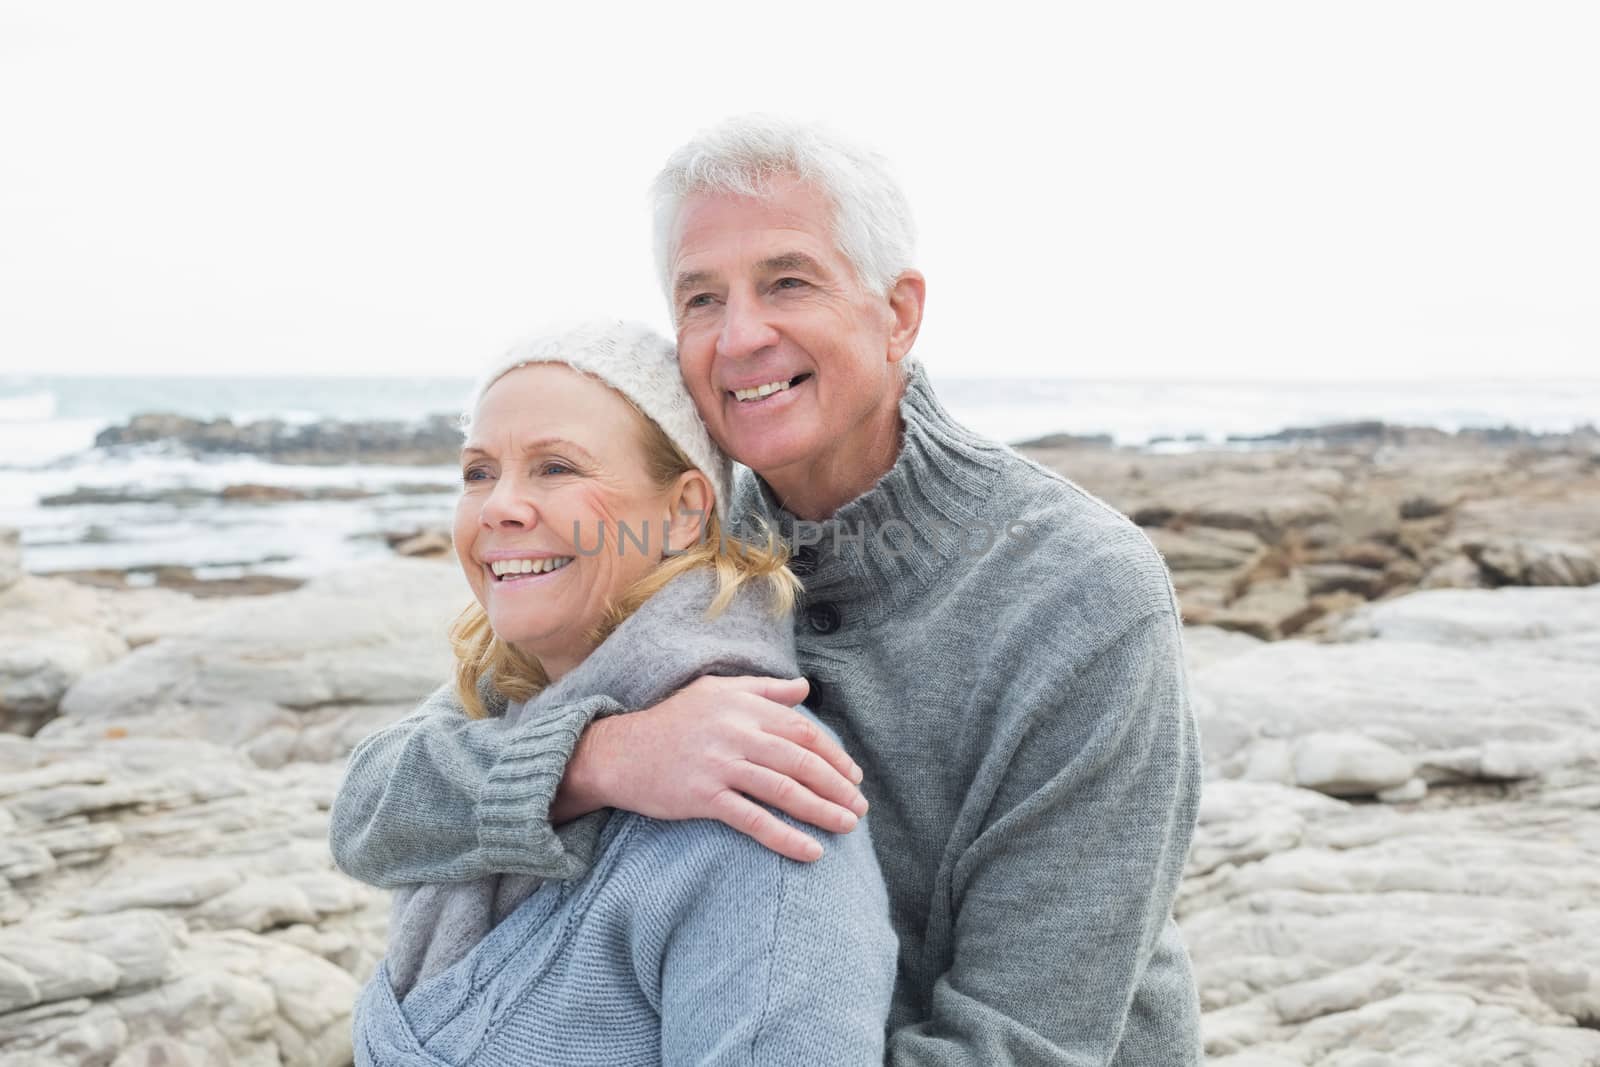 Closeup of a romantic senior couple together on a rocky beach